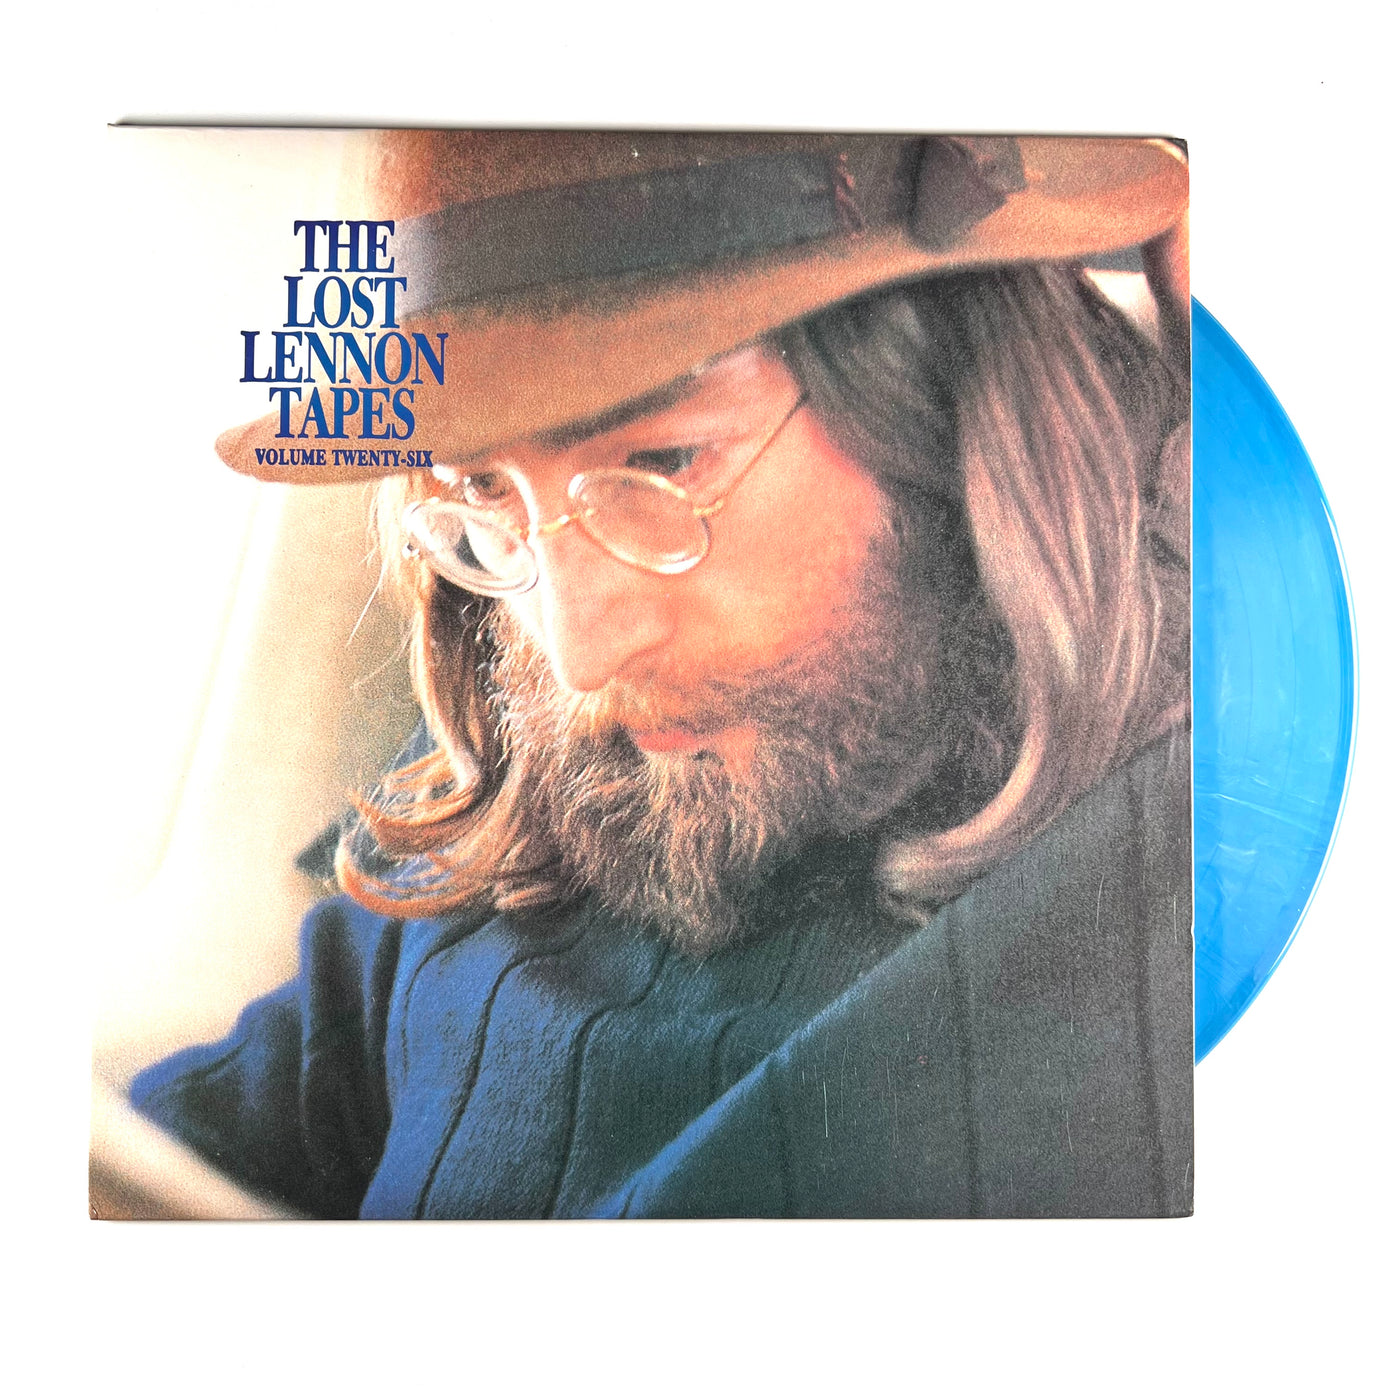 John Lennon - The Lost Lennon Tapes Volume Twenty-Six